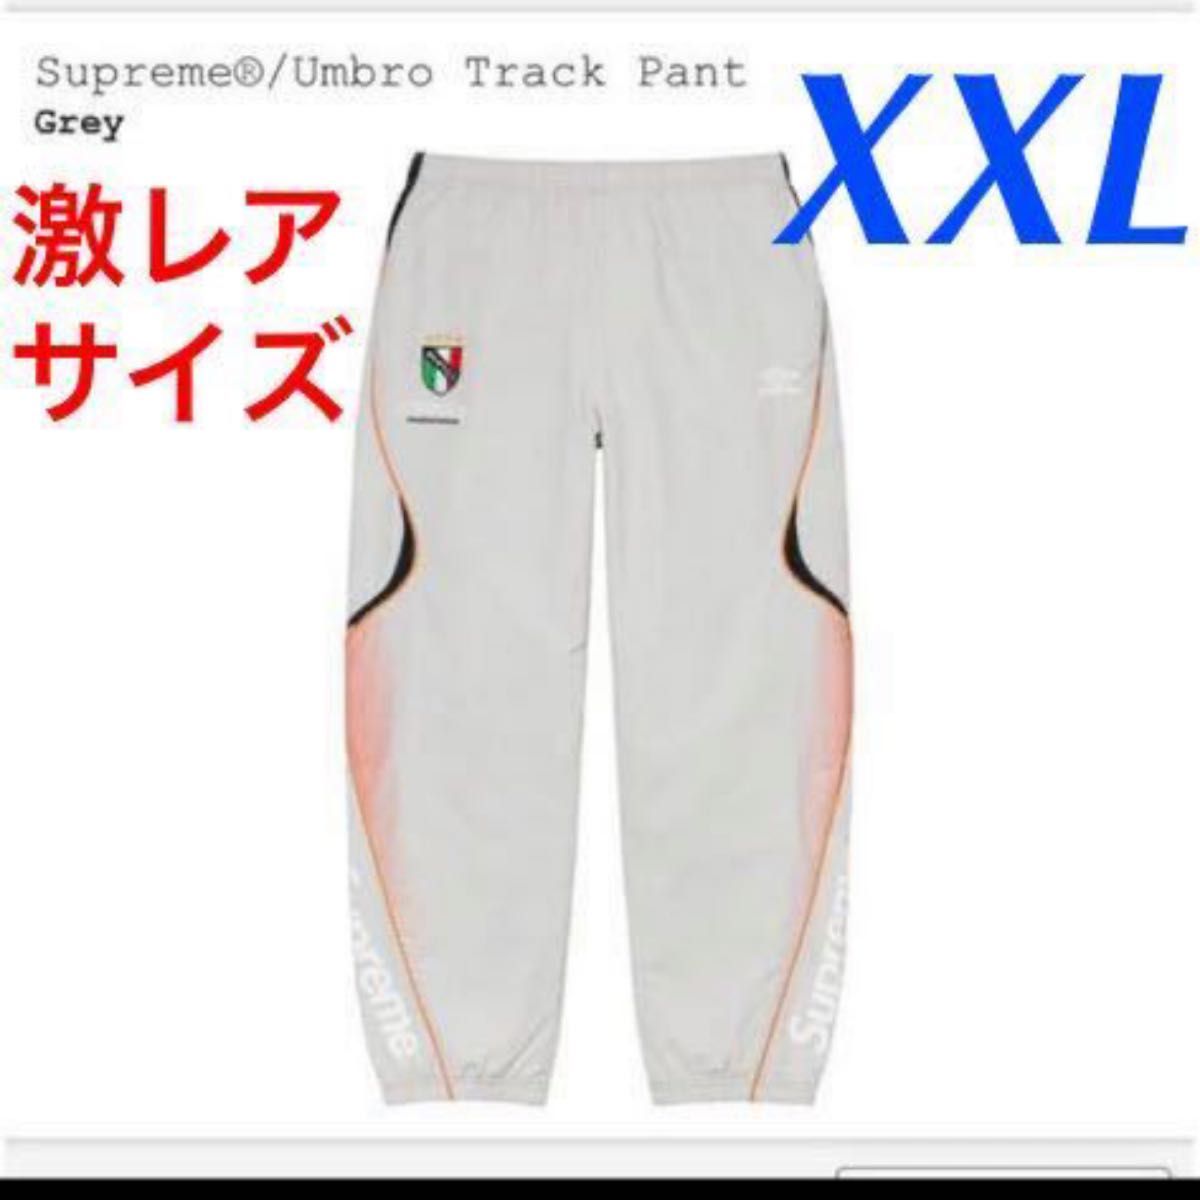 Supreme / Umbro Track Pant Grey 【XXL】シュプリーム アンブロ